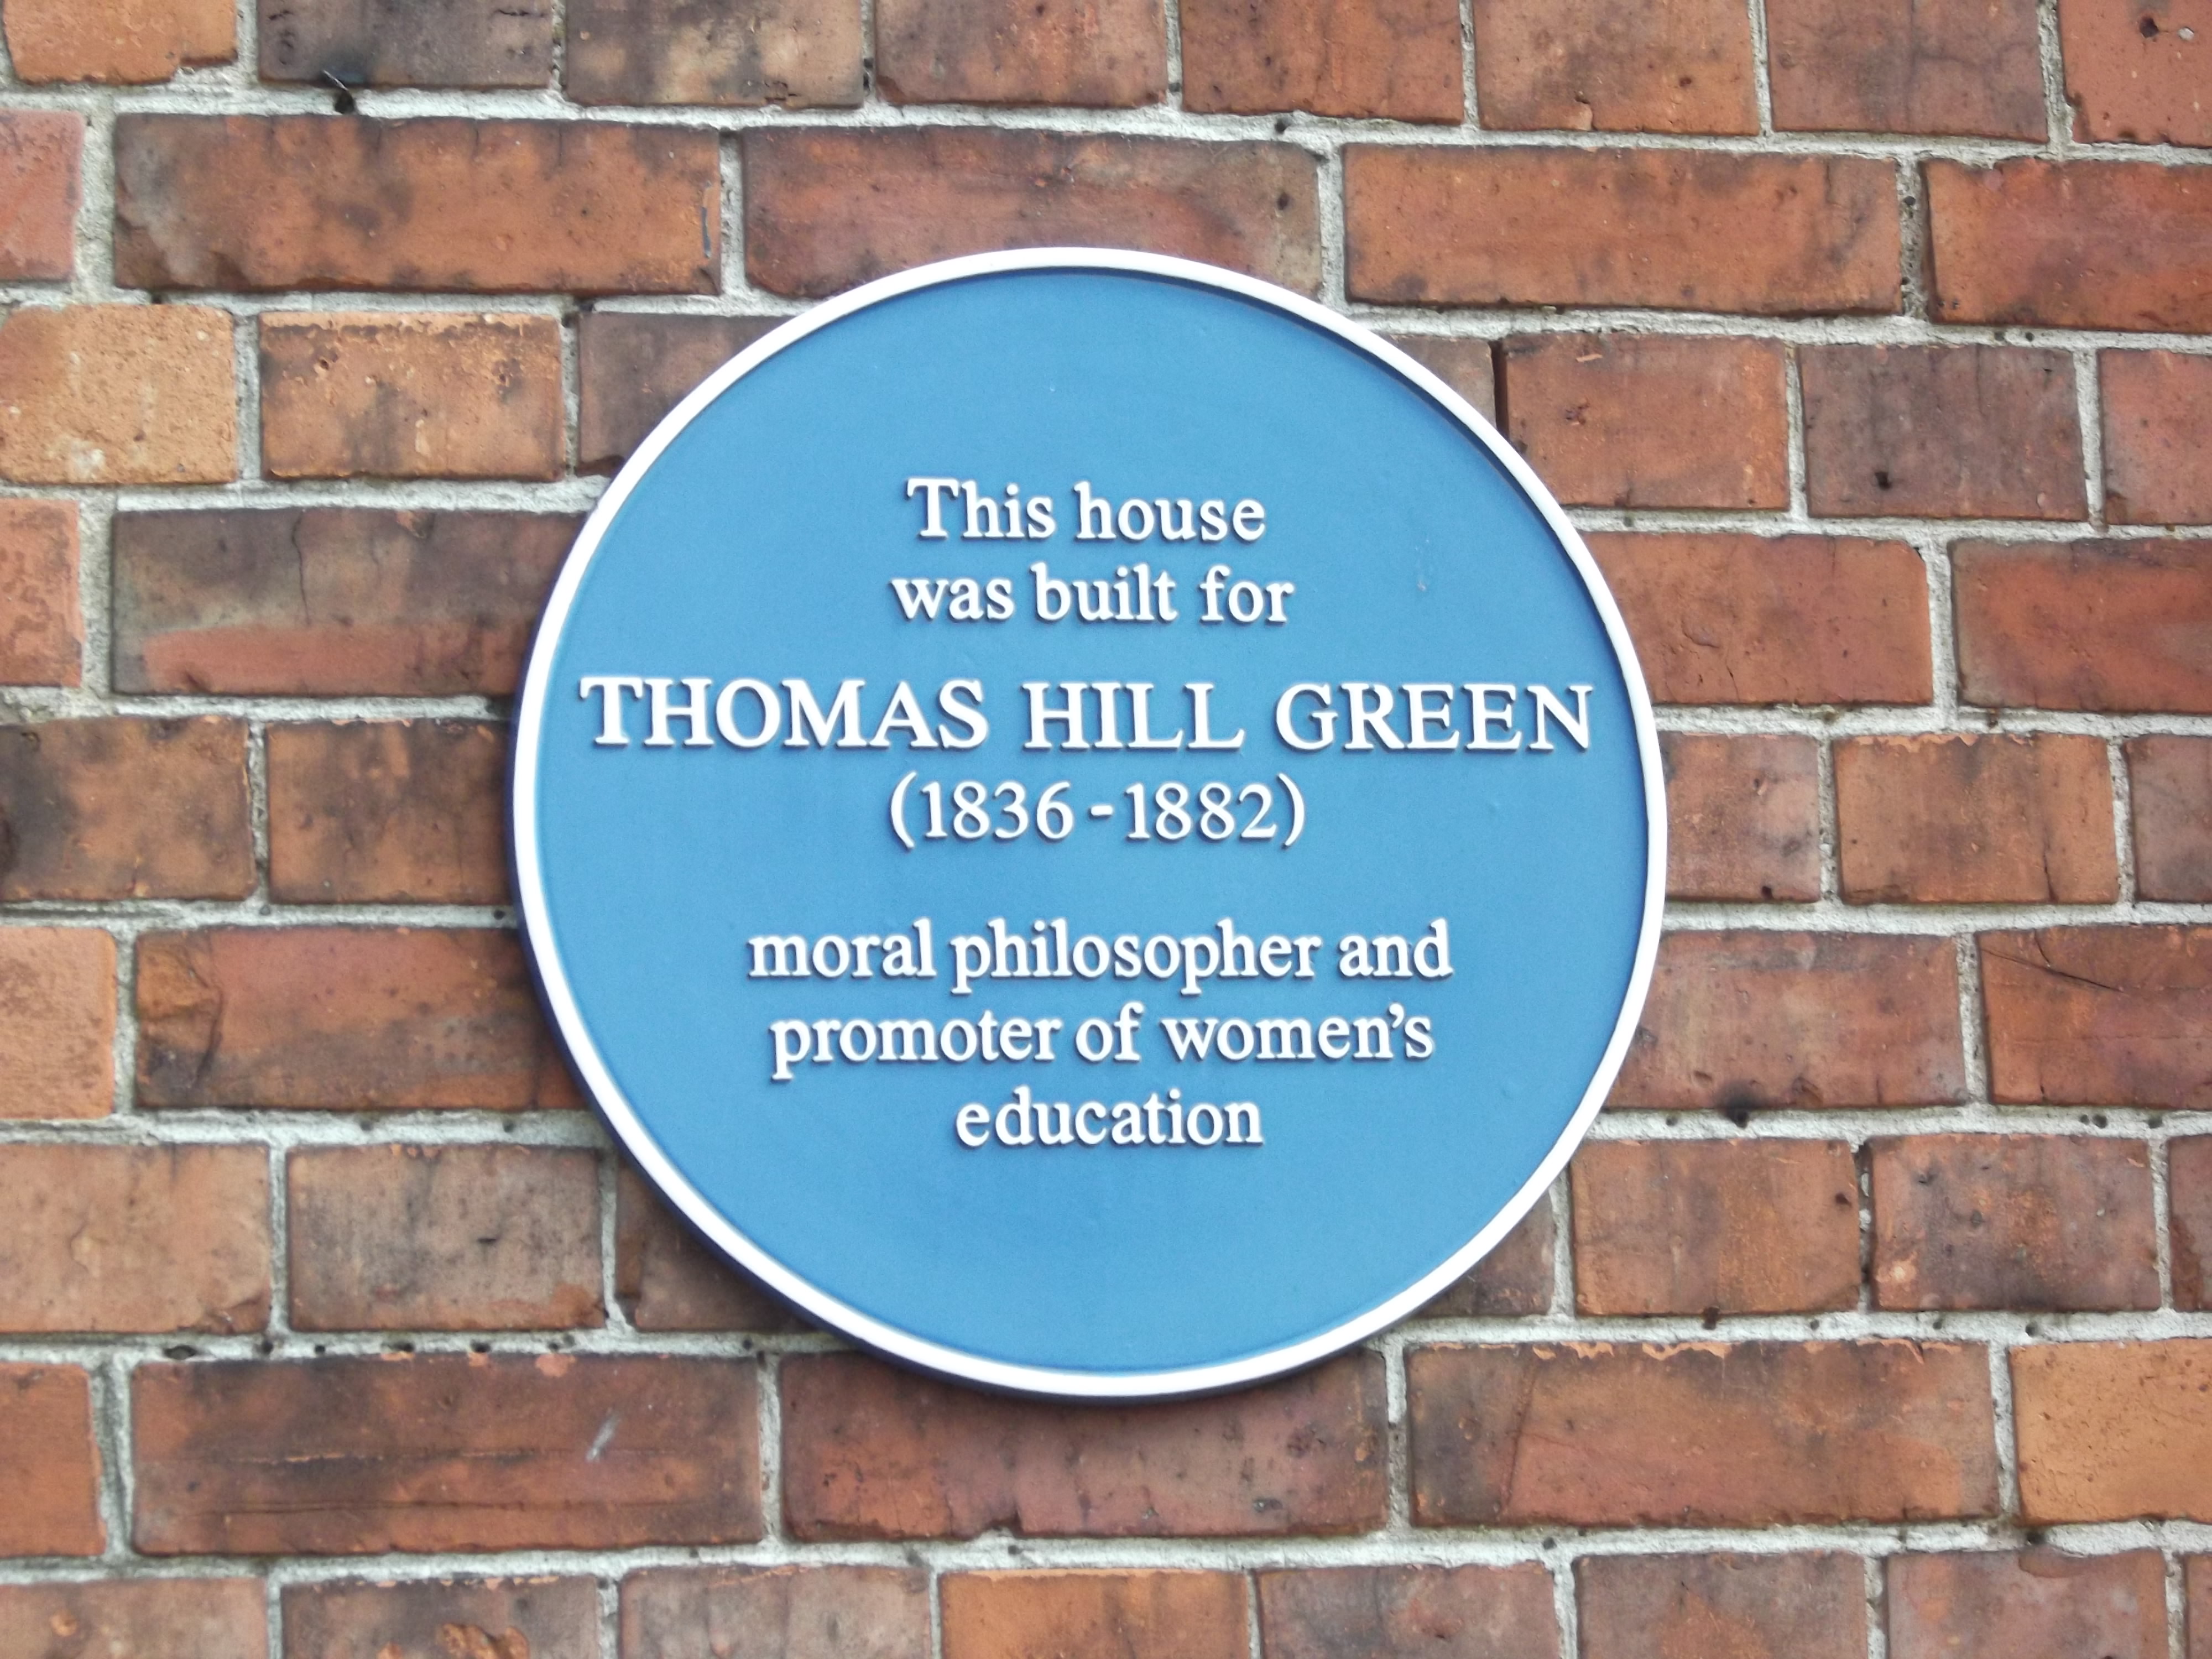 Plaque commemorating Thomas Hill Green